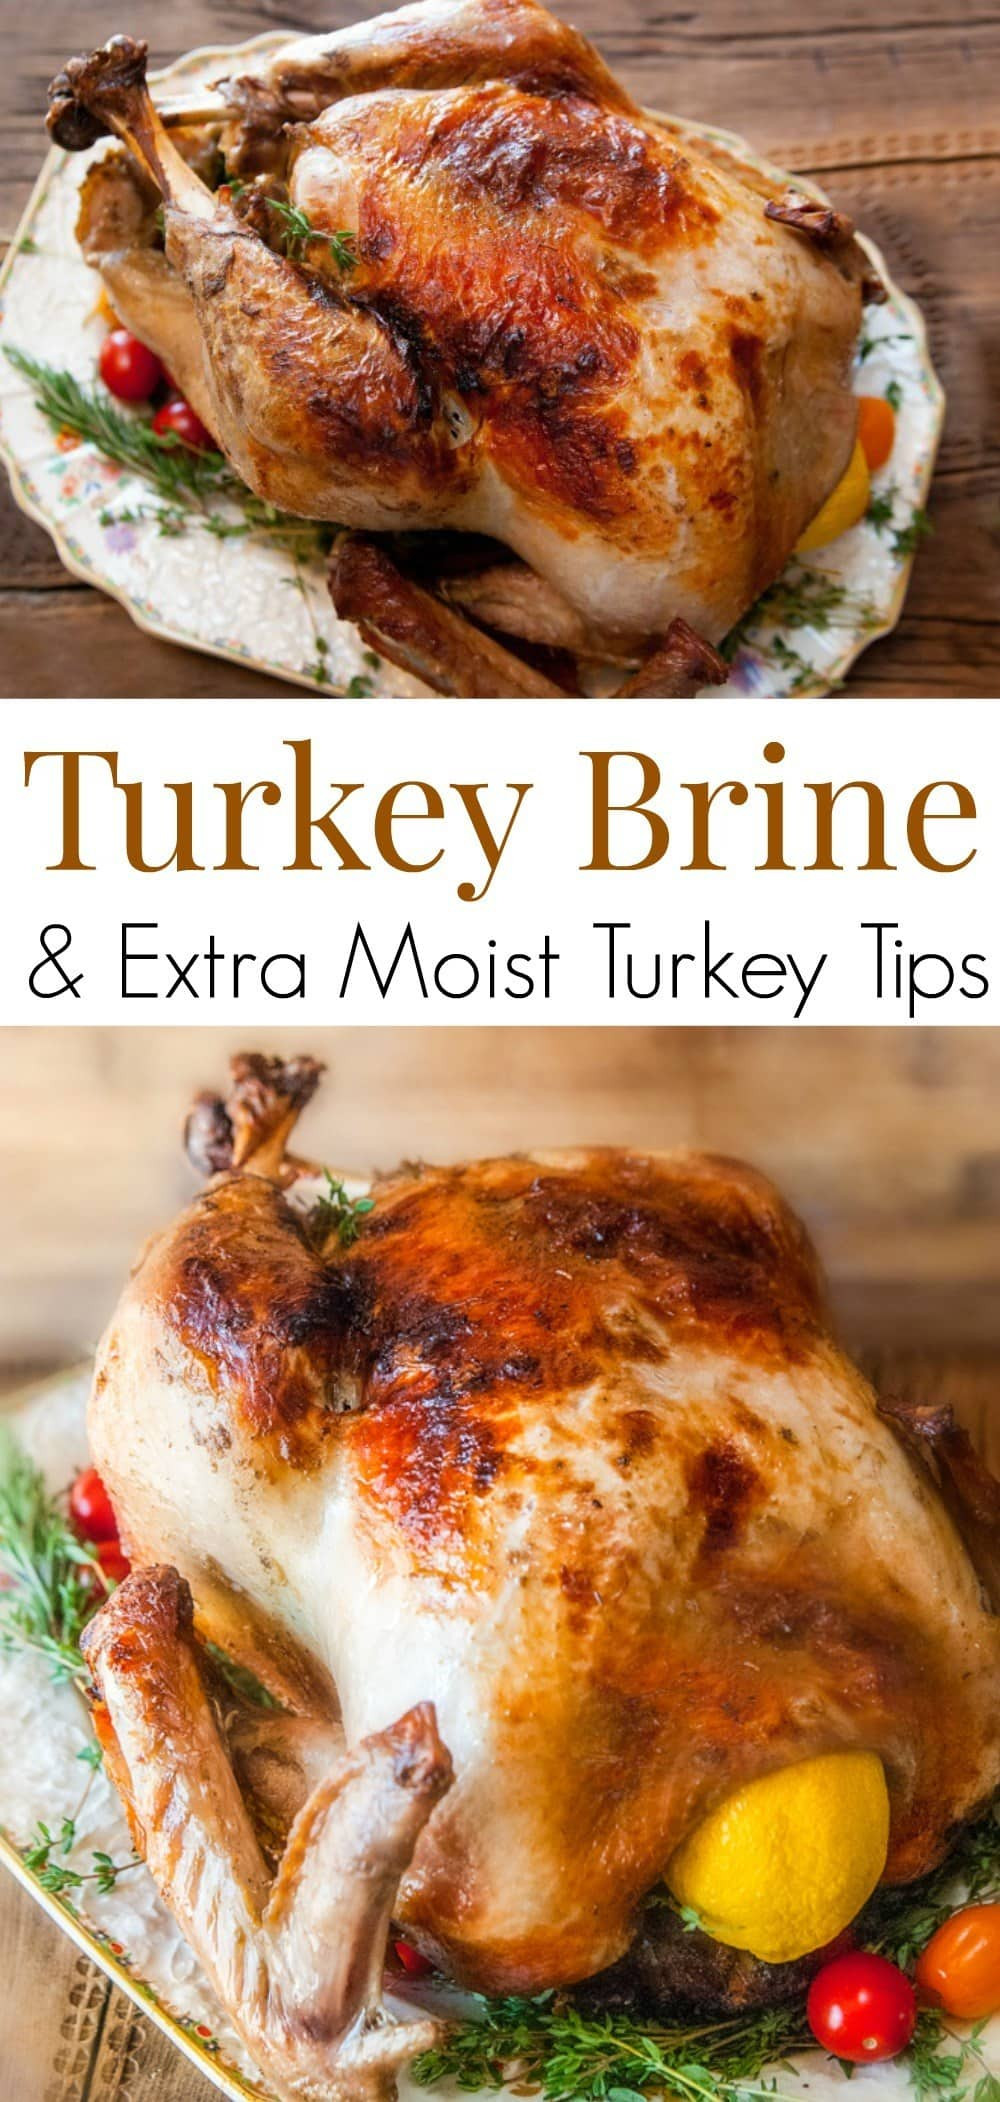 Turkey Brine Recipes
 Citrus & Herb Turkey Brine Recipe for a Juicy Thanksgiving